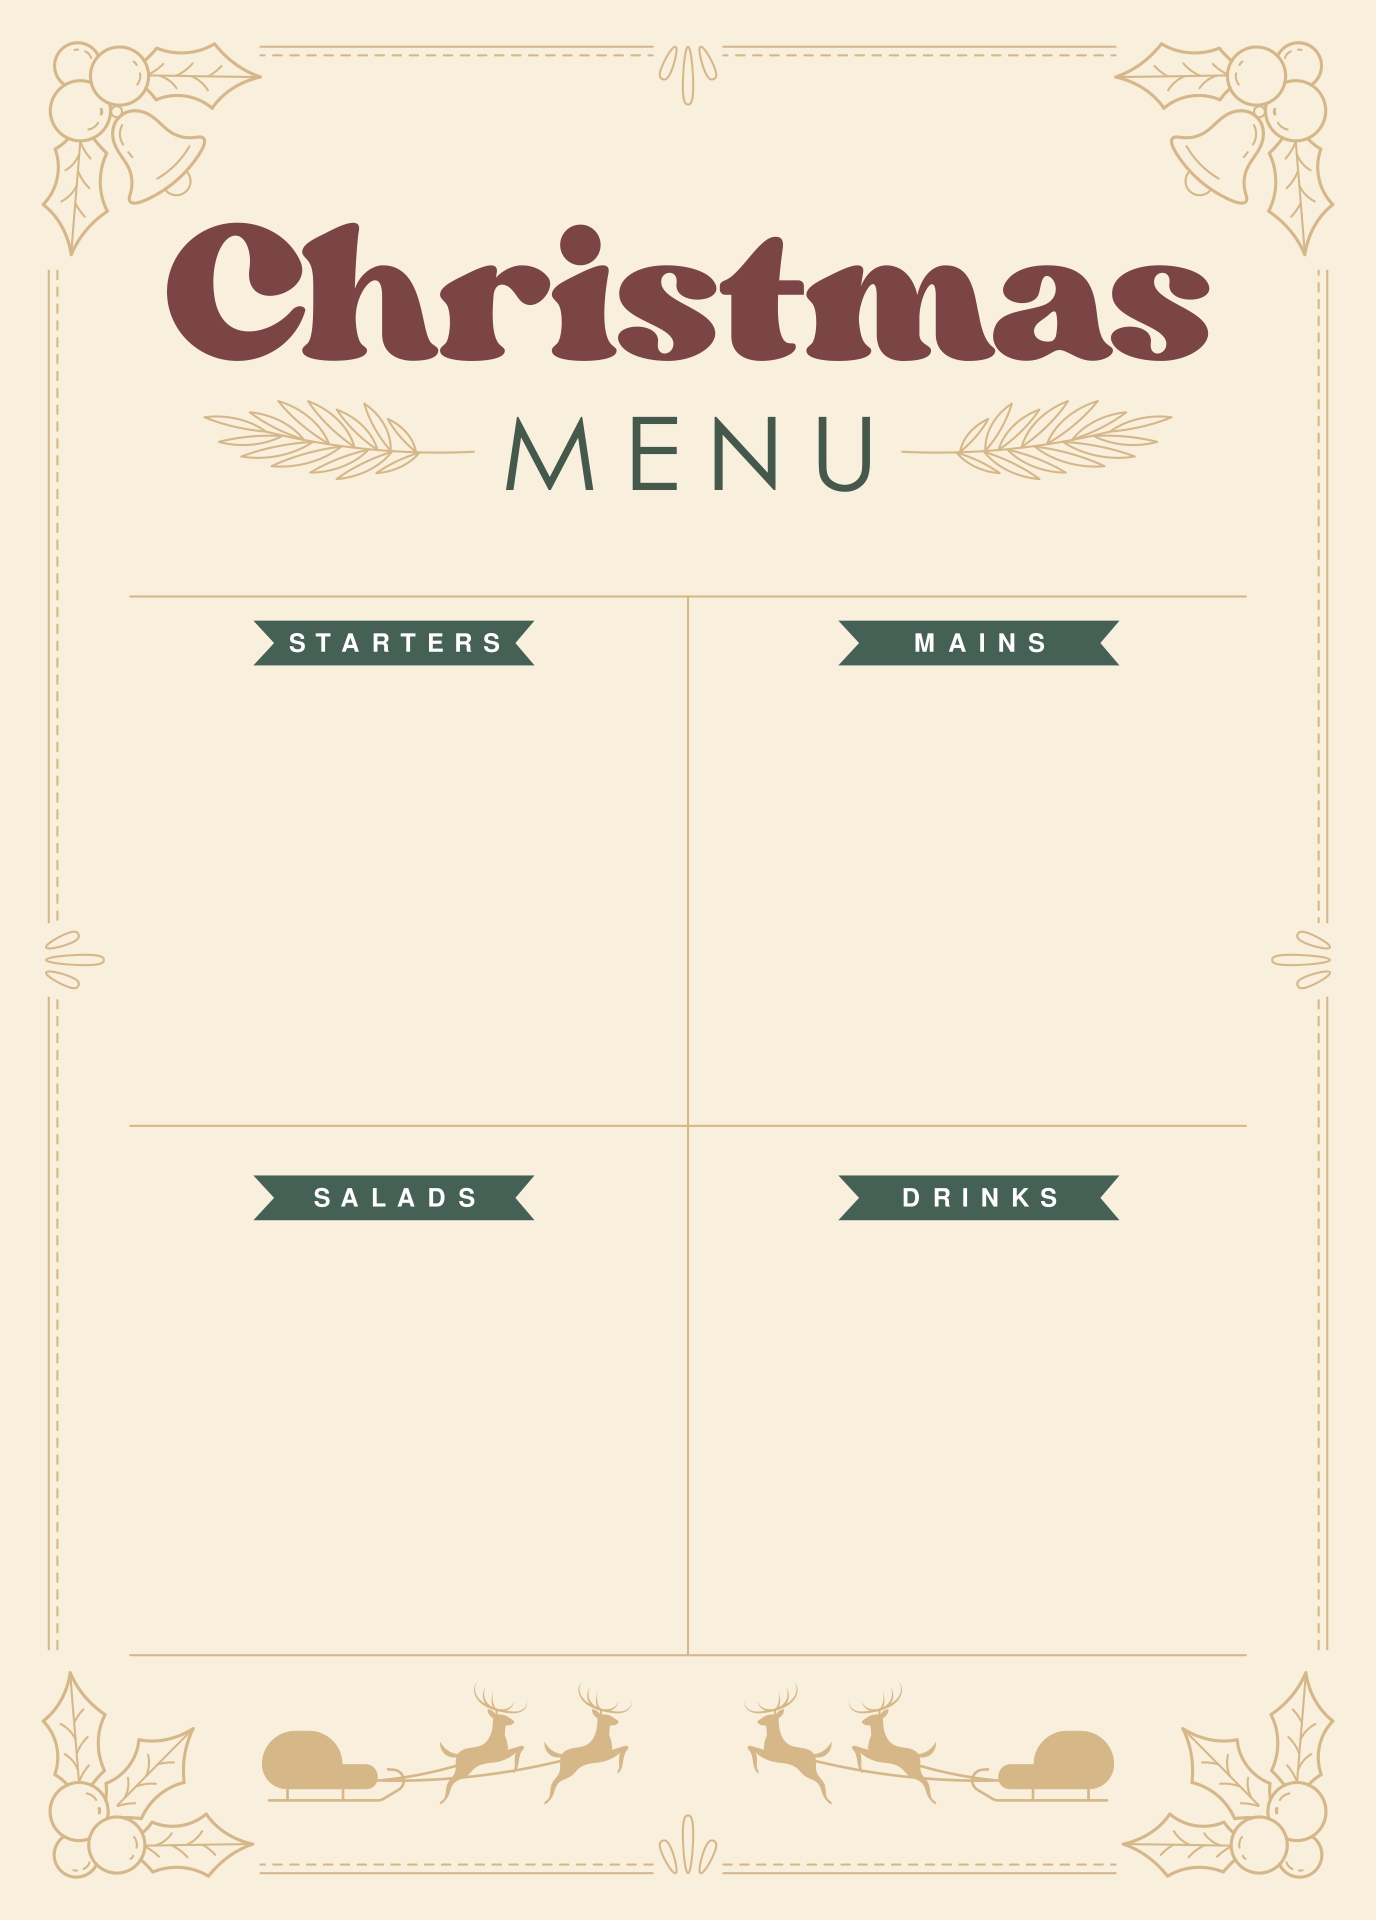 free-christmas-menu-templates-for-word